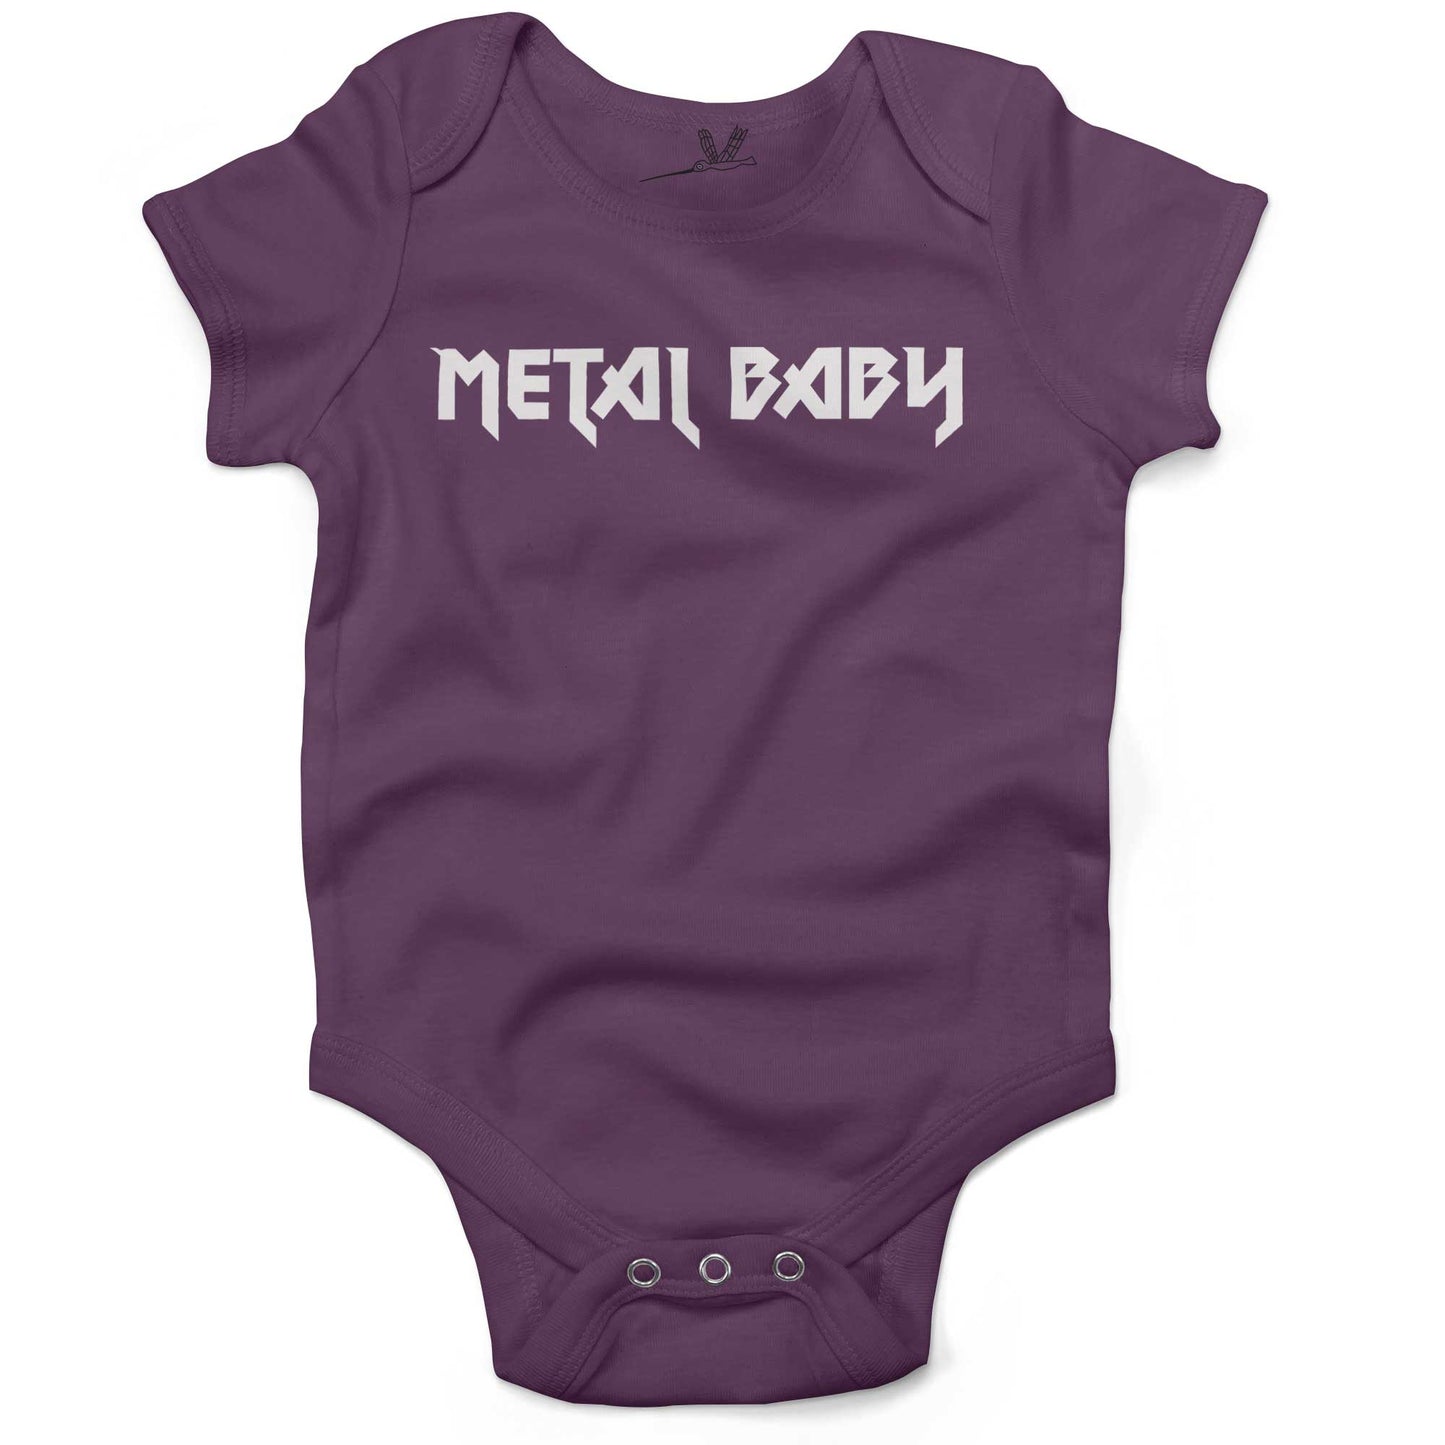 Metal Baby Infant Bodysuit or Raglan Baby Tee-Organic Purple-3-6 months